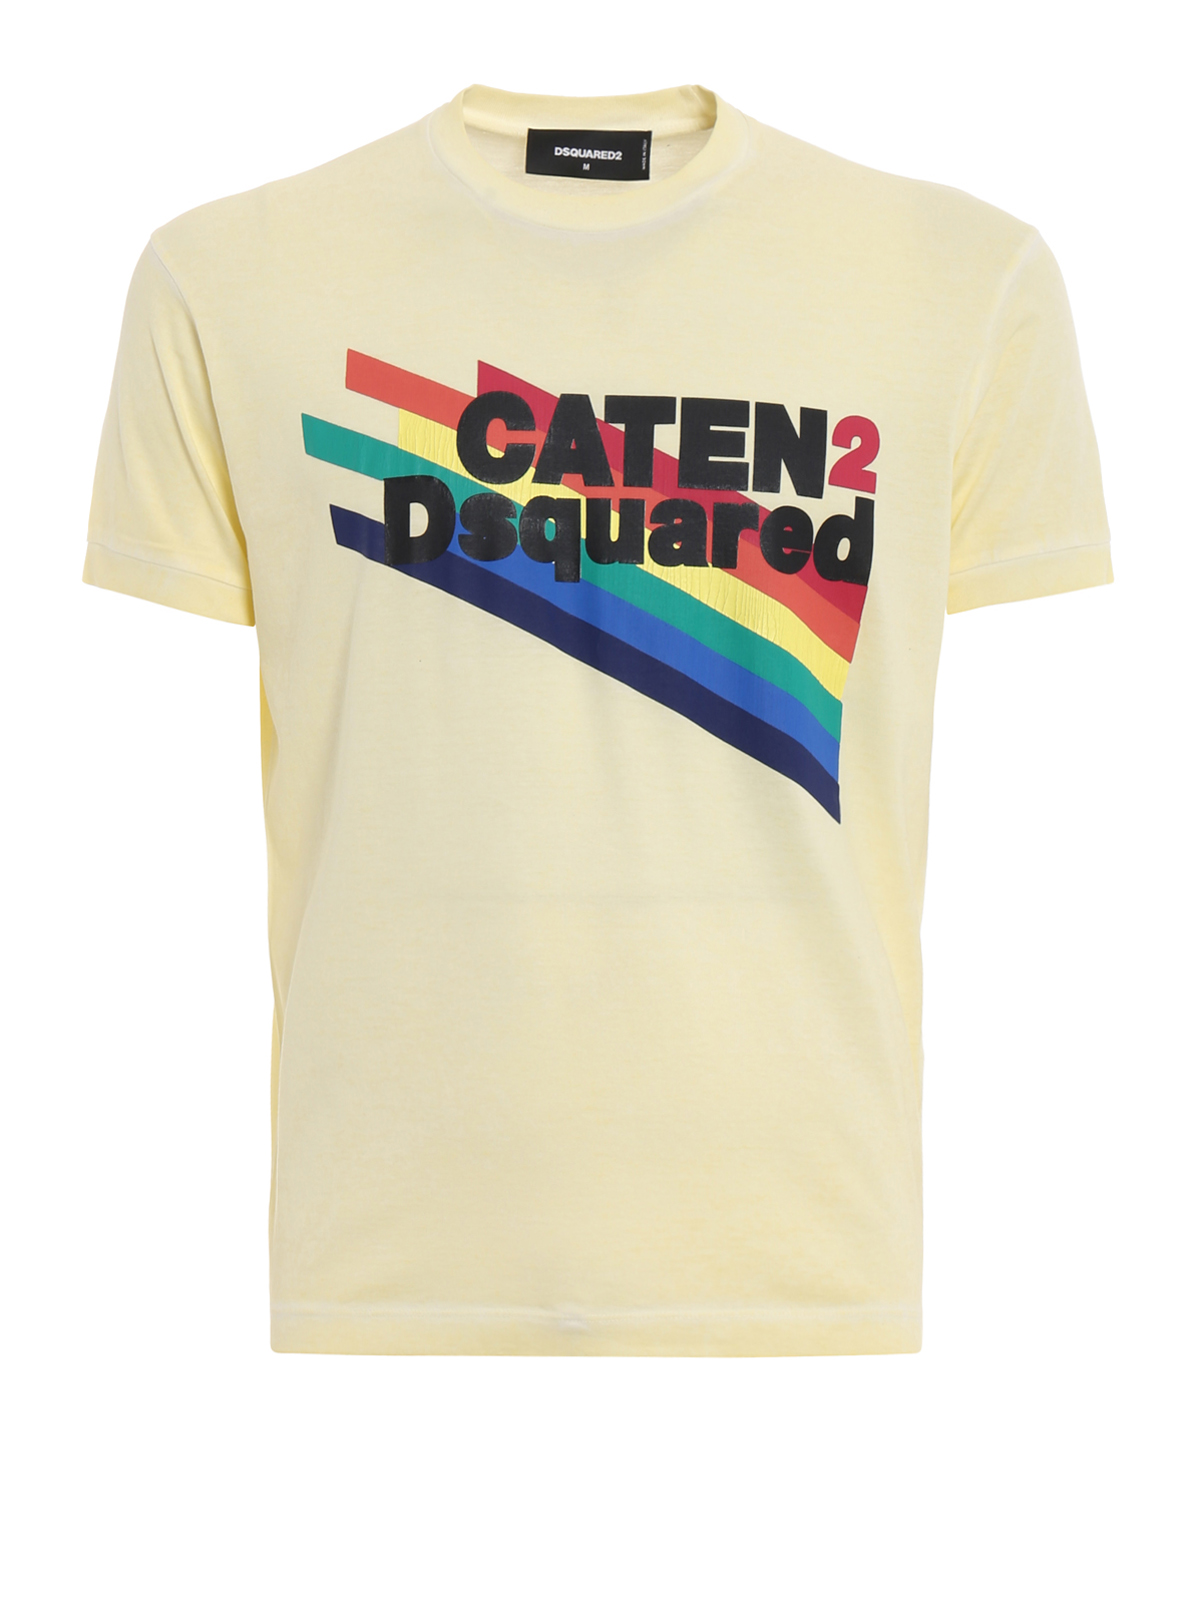 tent tuberculose Passend T-shirts Dsquared2 - Caten rainbow T-shirt - S71GD0630S22427169